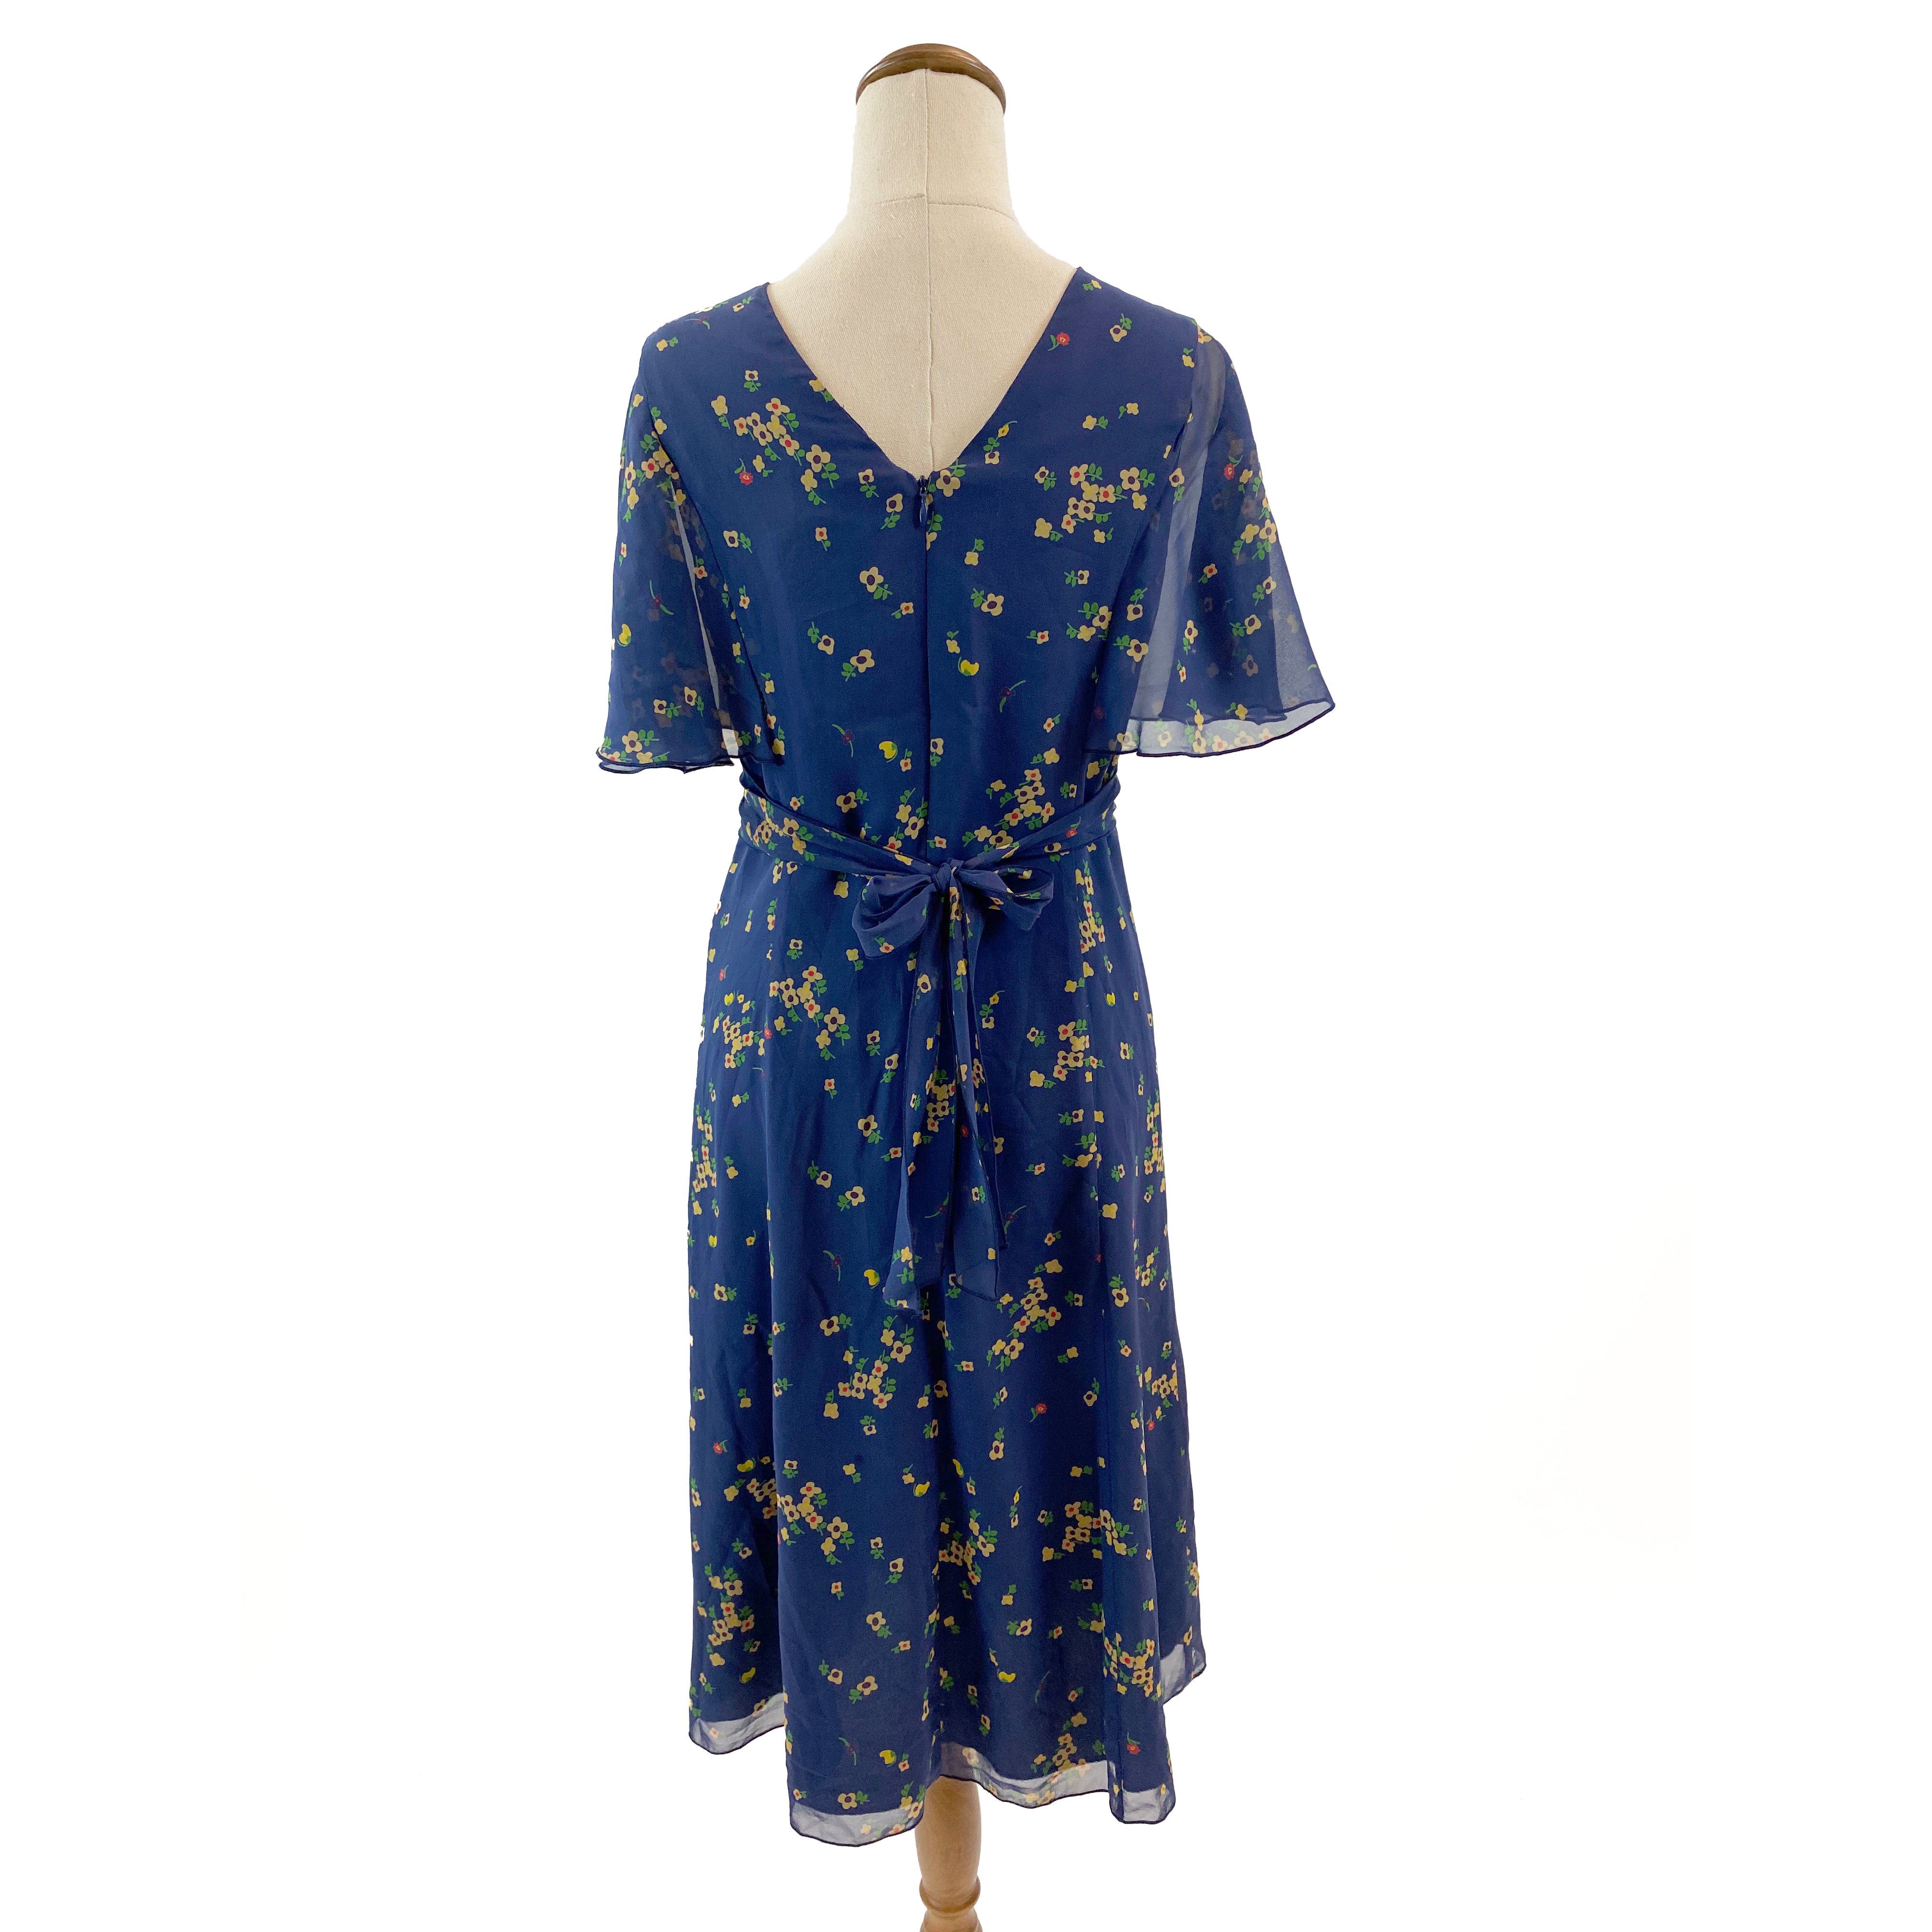 Anna Sui Vintage Style Navy Floral Silk Dress